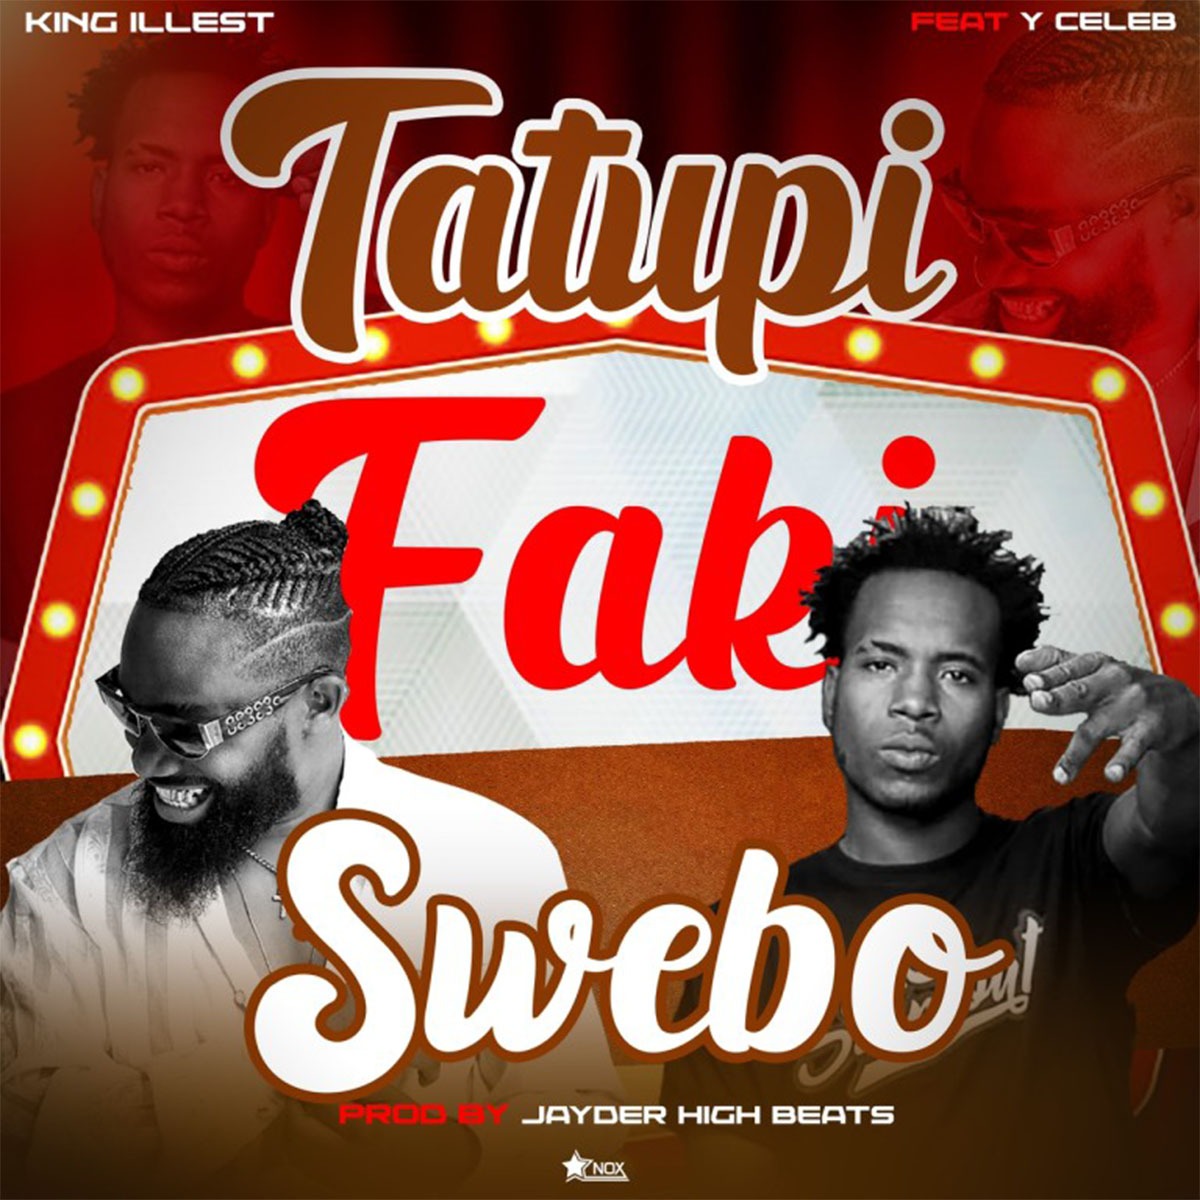 King Illest ft. Y Celeb - Tatupi Faki Swebo